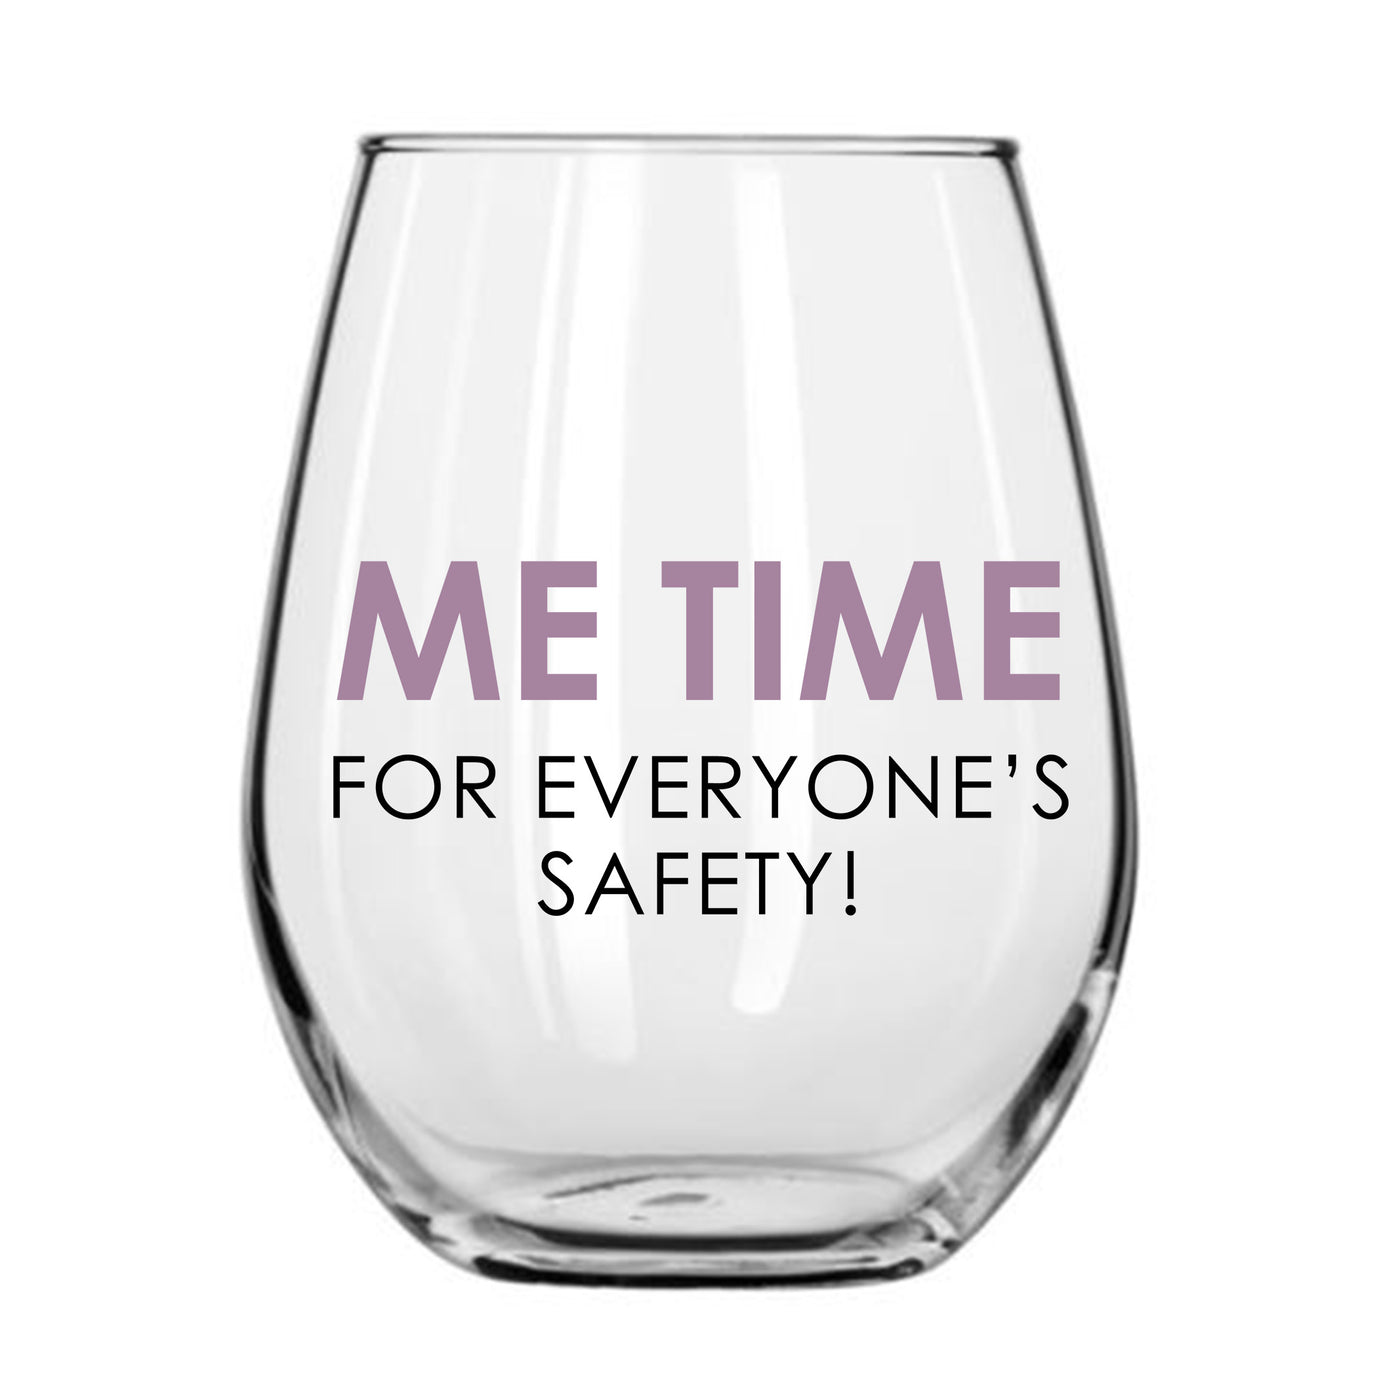 ME TIME WINE GLASS